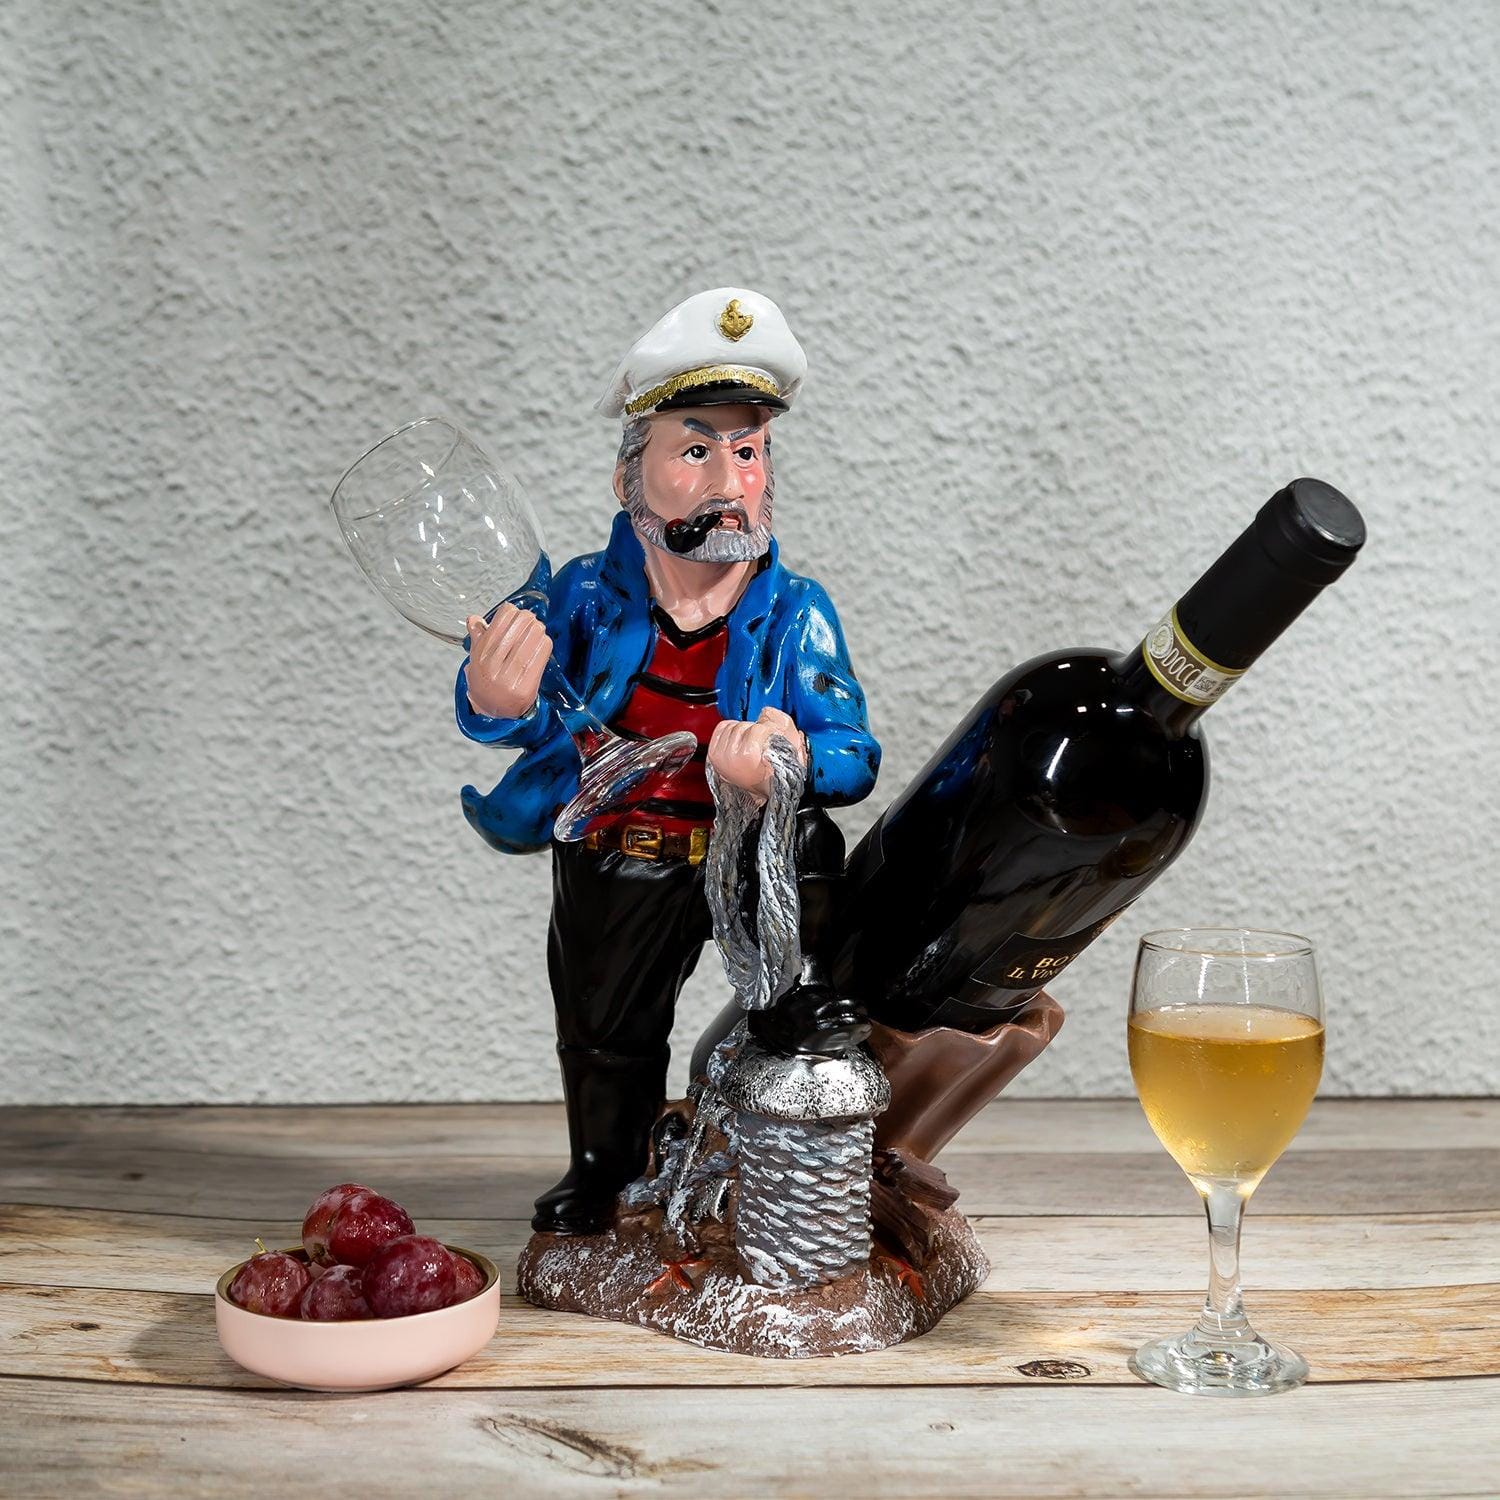 Nautical Sailor Figurine Resin Bottle Holder with 1 Wine Glass Set (Dredger - Blue Coat)